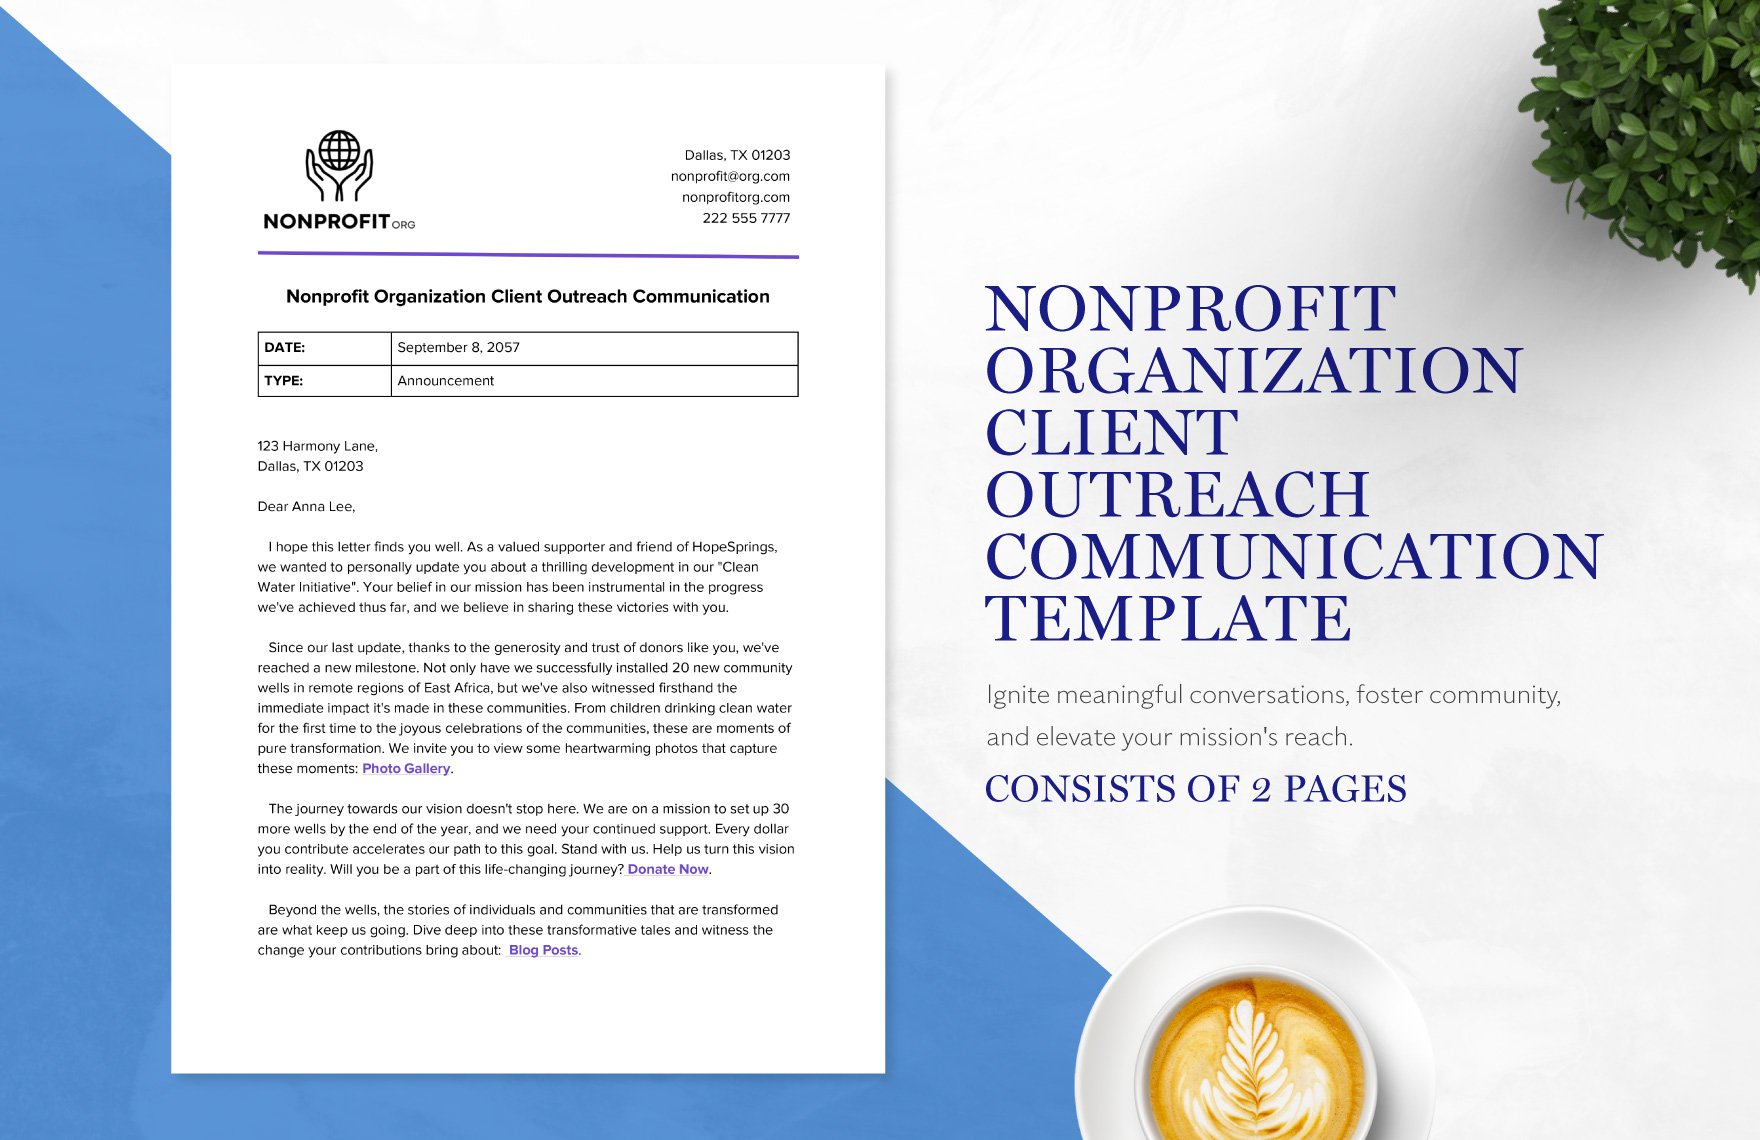 Nonprofit Organization Client Outreach Communication Template